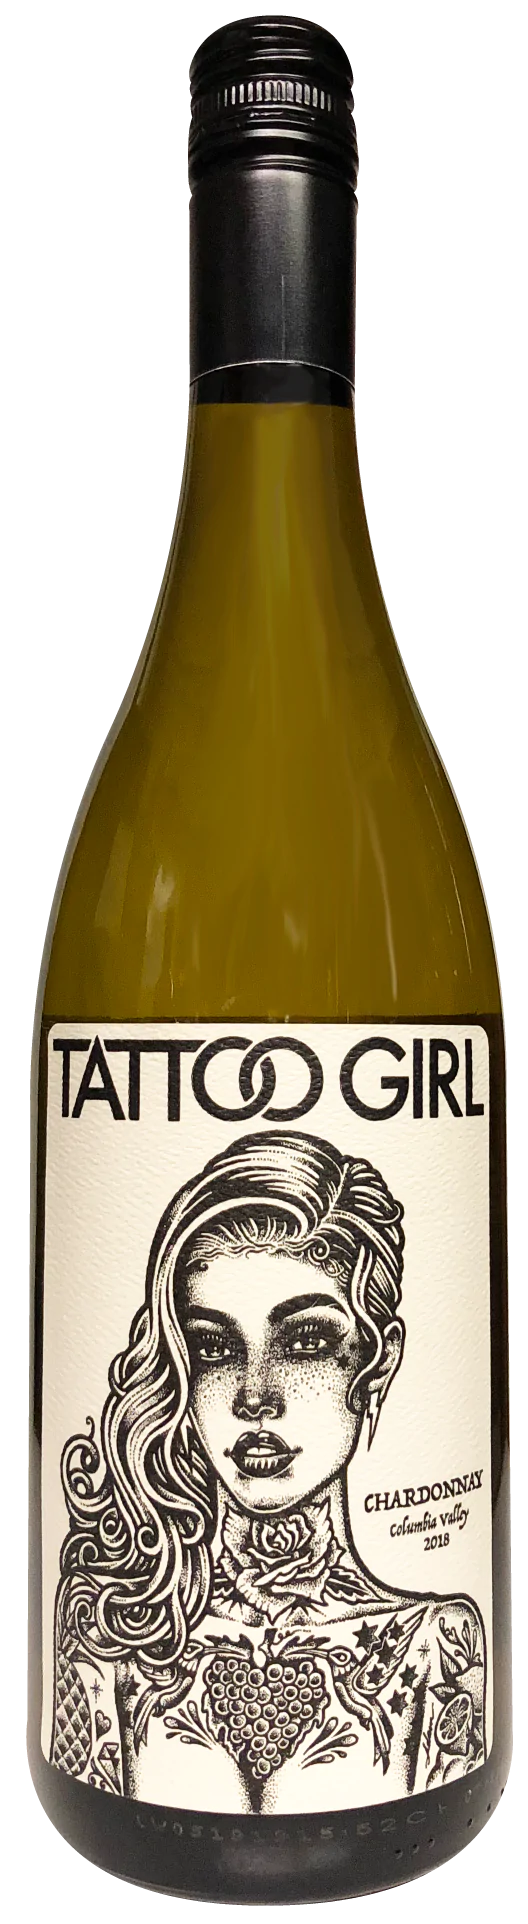 Tattoo Girl Columbia Valley Chardonnay 2019